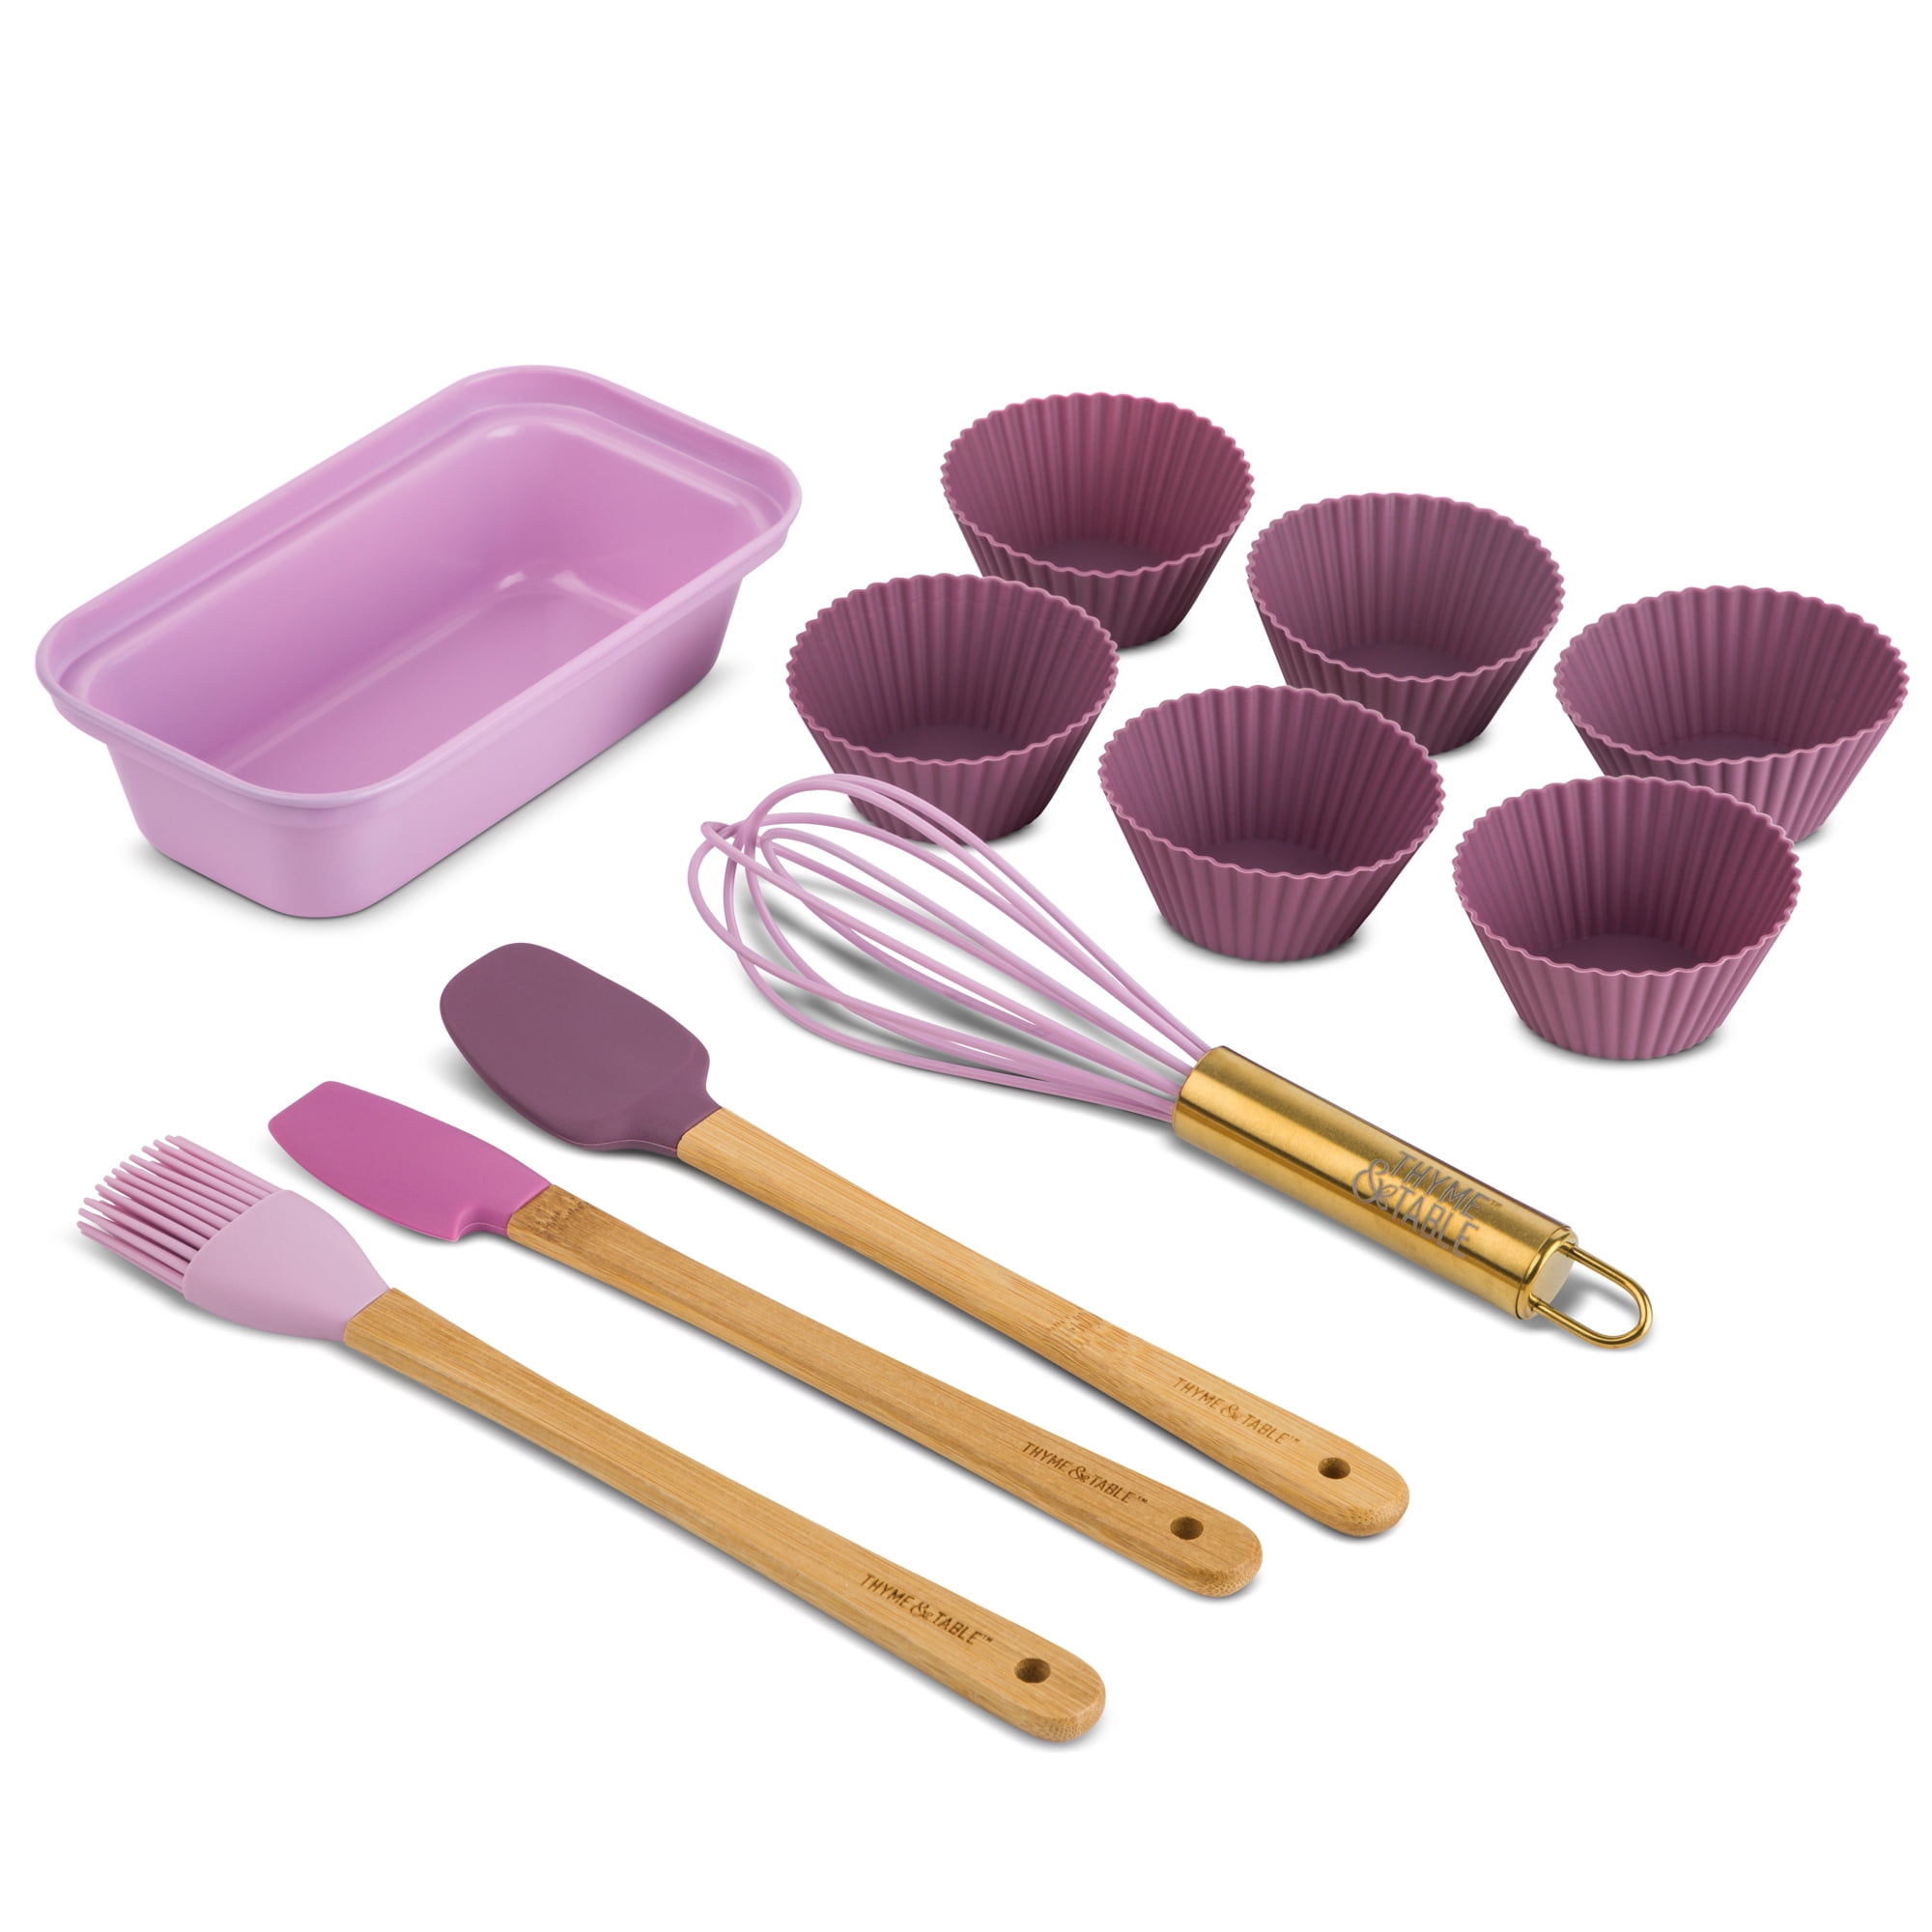 Artboil Mini Cooking Utensils set, 8 Silicone Cooking Supplies, Cupcake  Baking Supplies with Decorating Tools Set, Kitchen Utensils Baking Set for